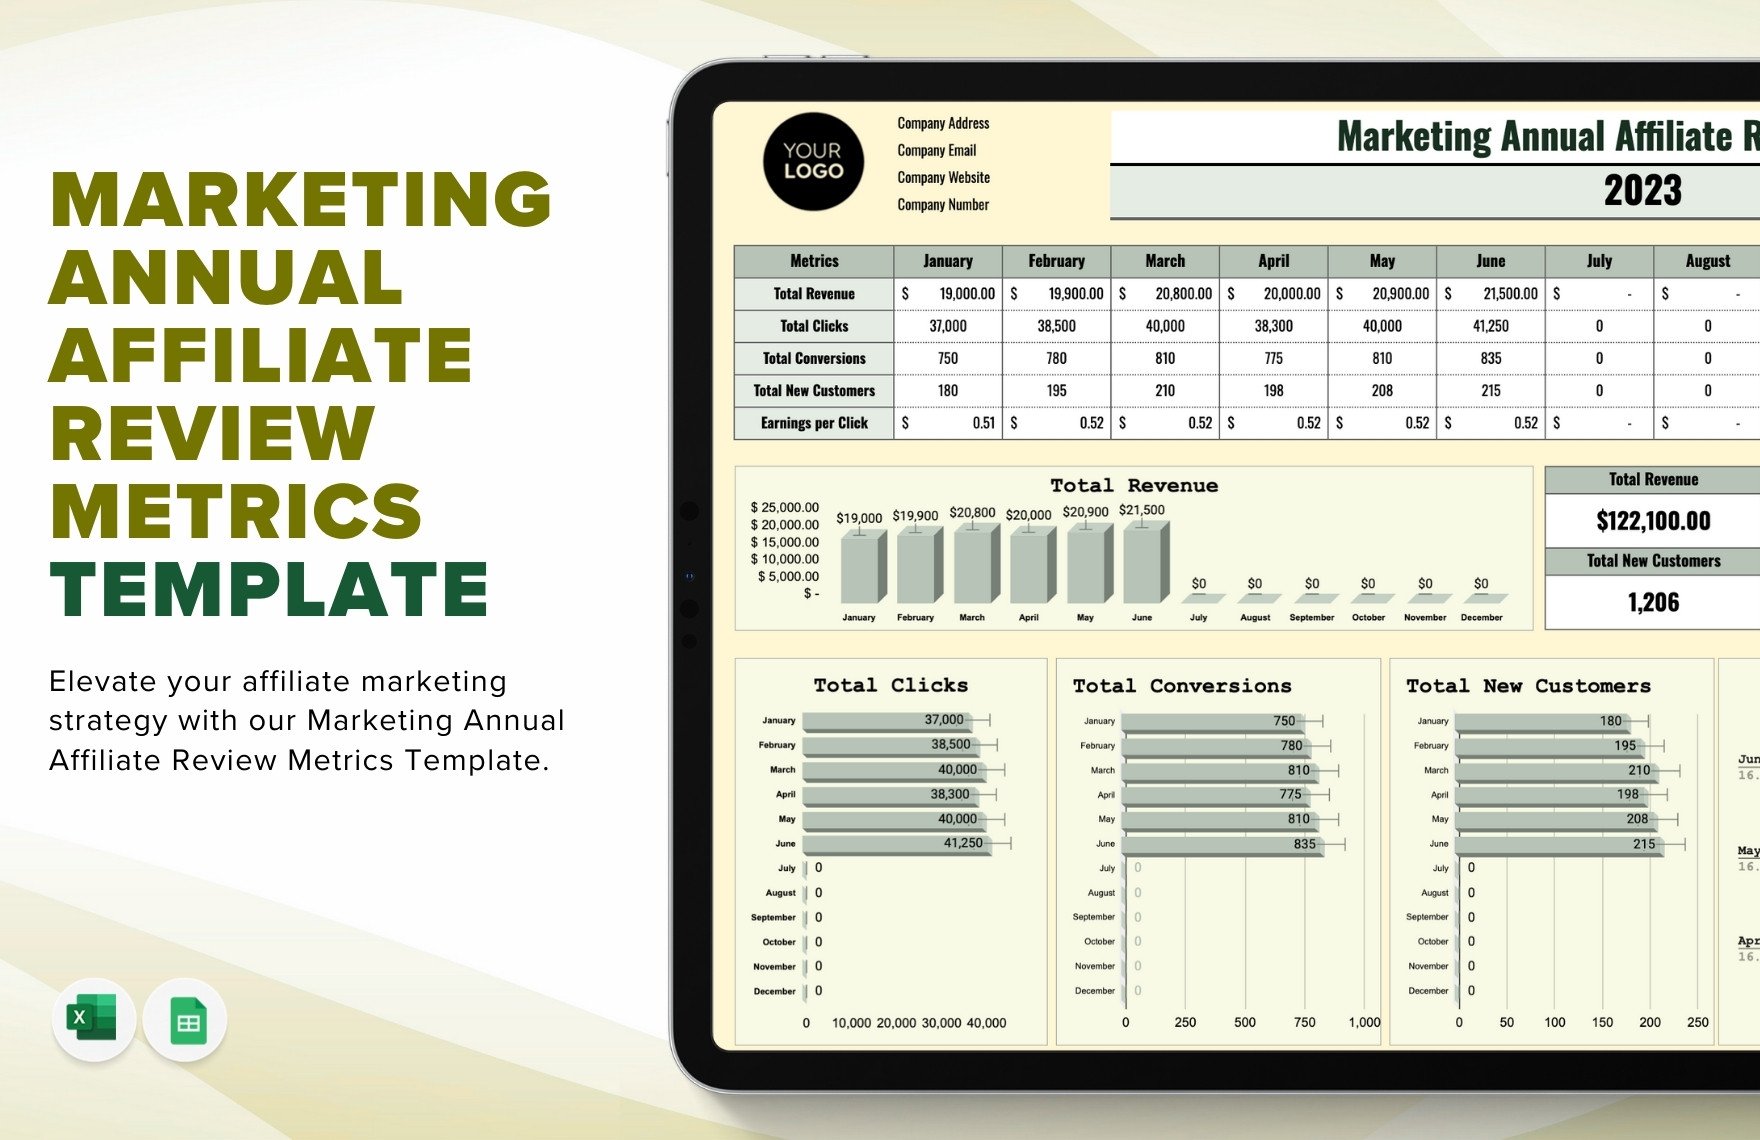 Marketing Annual Affiliate Review Metrics Template